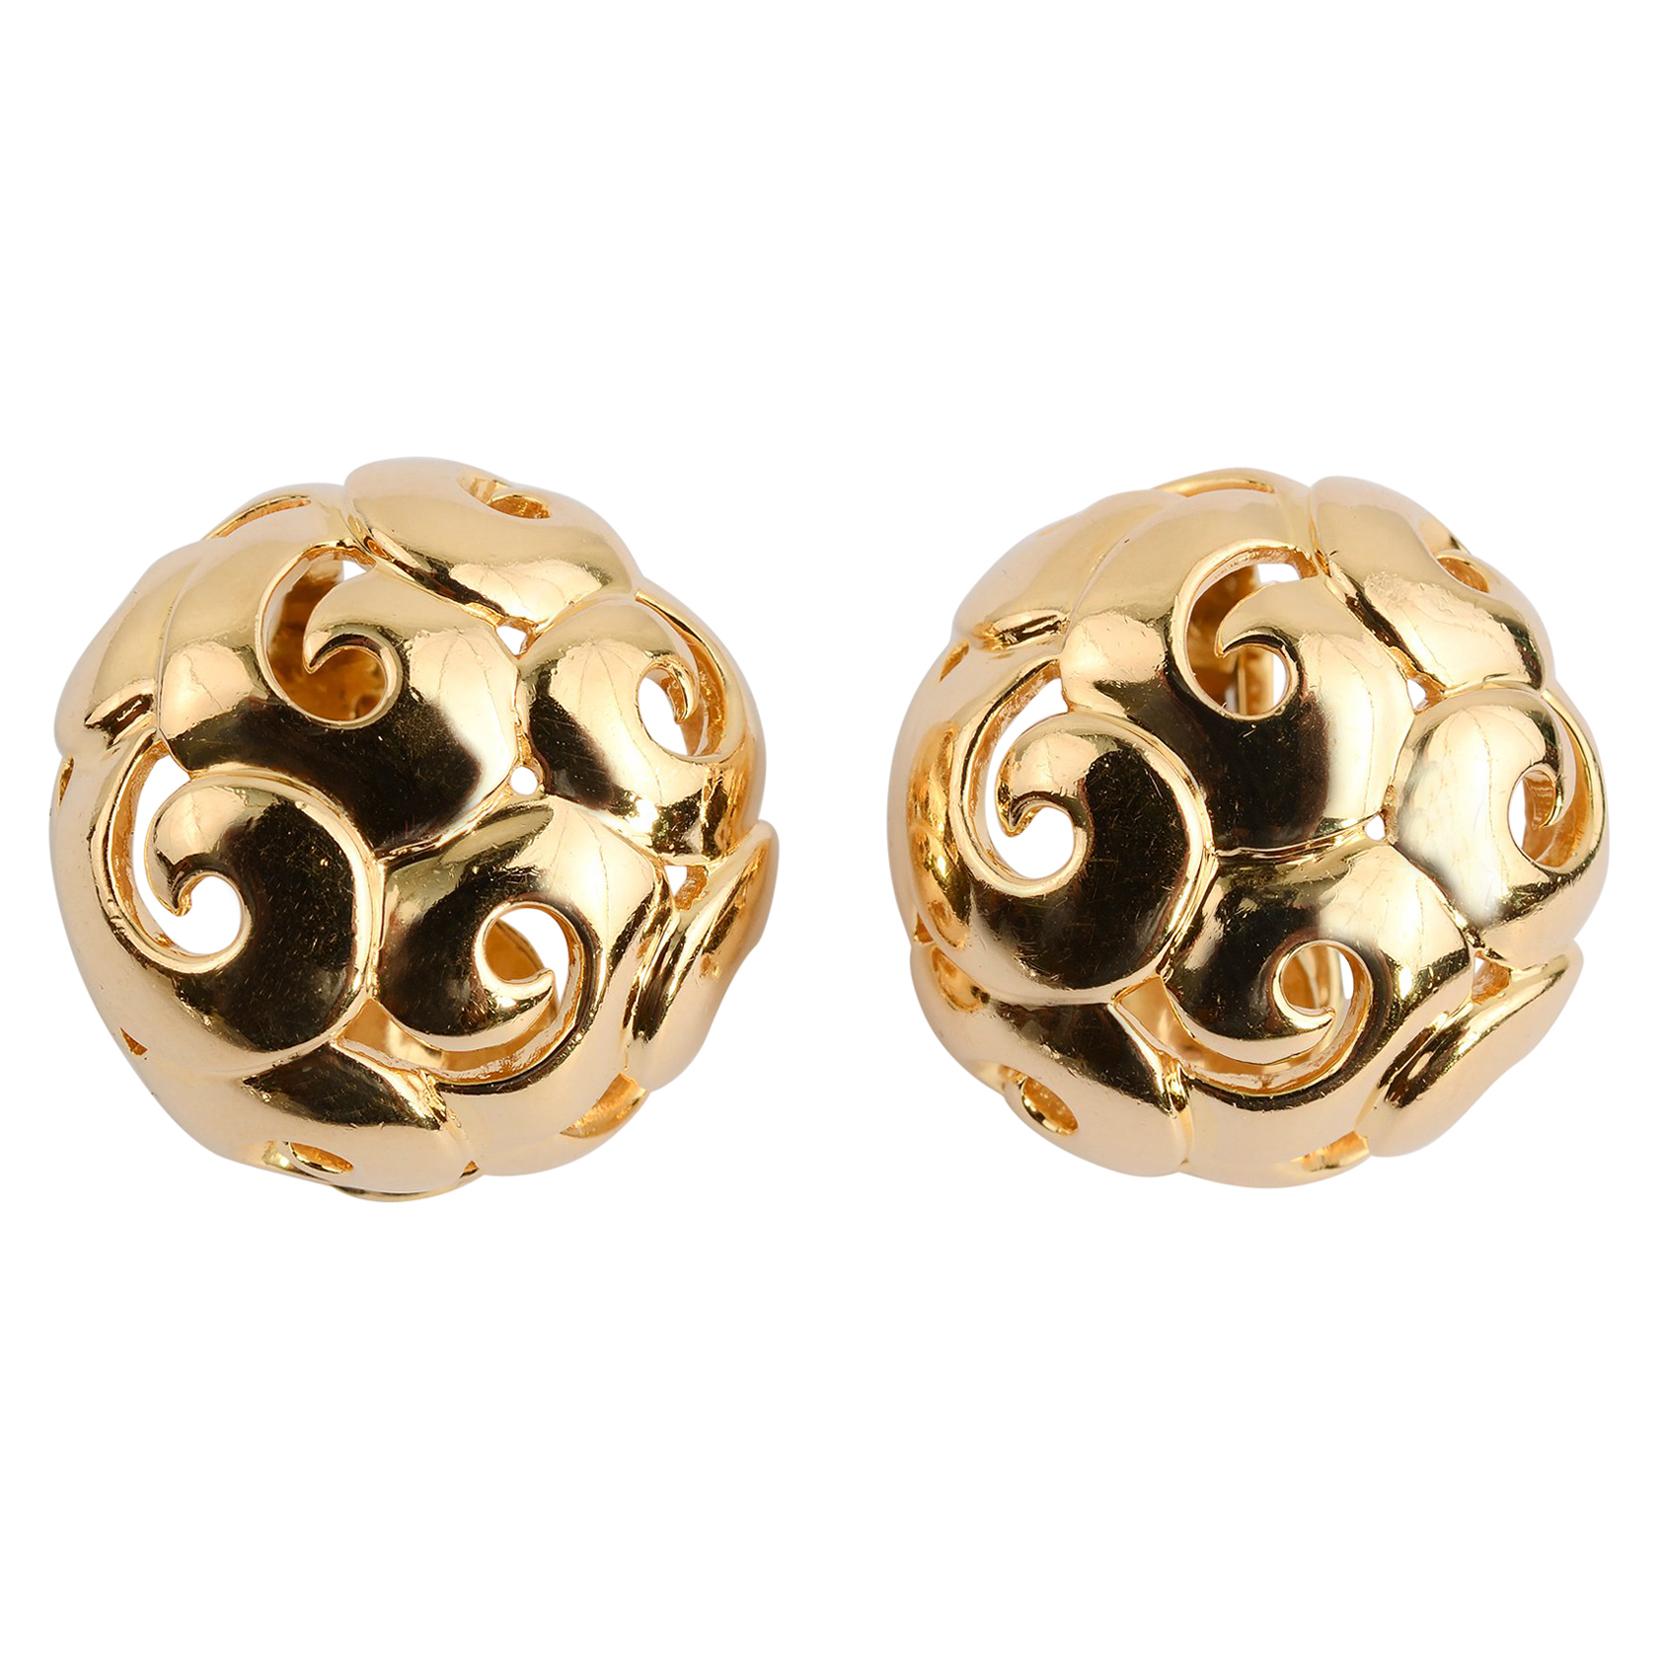 Gumps Goldkuppel-Ohrringe mit kreisförmigem Design